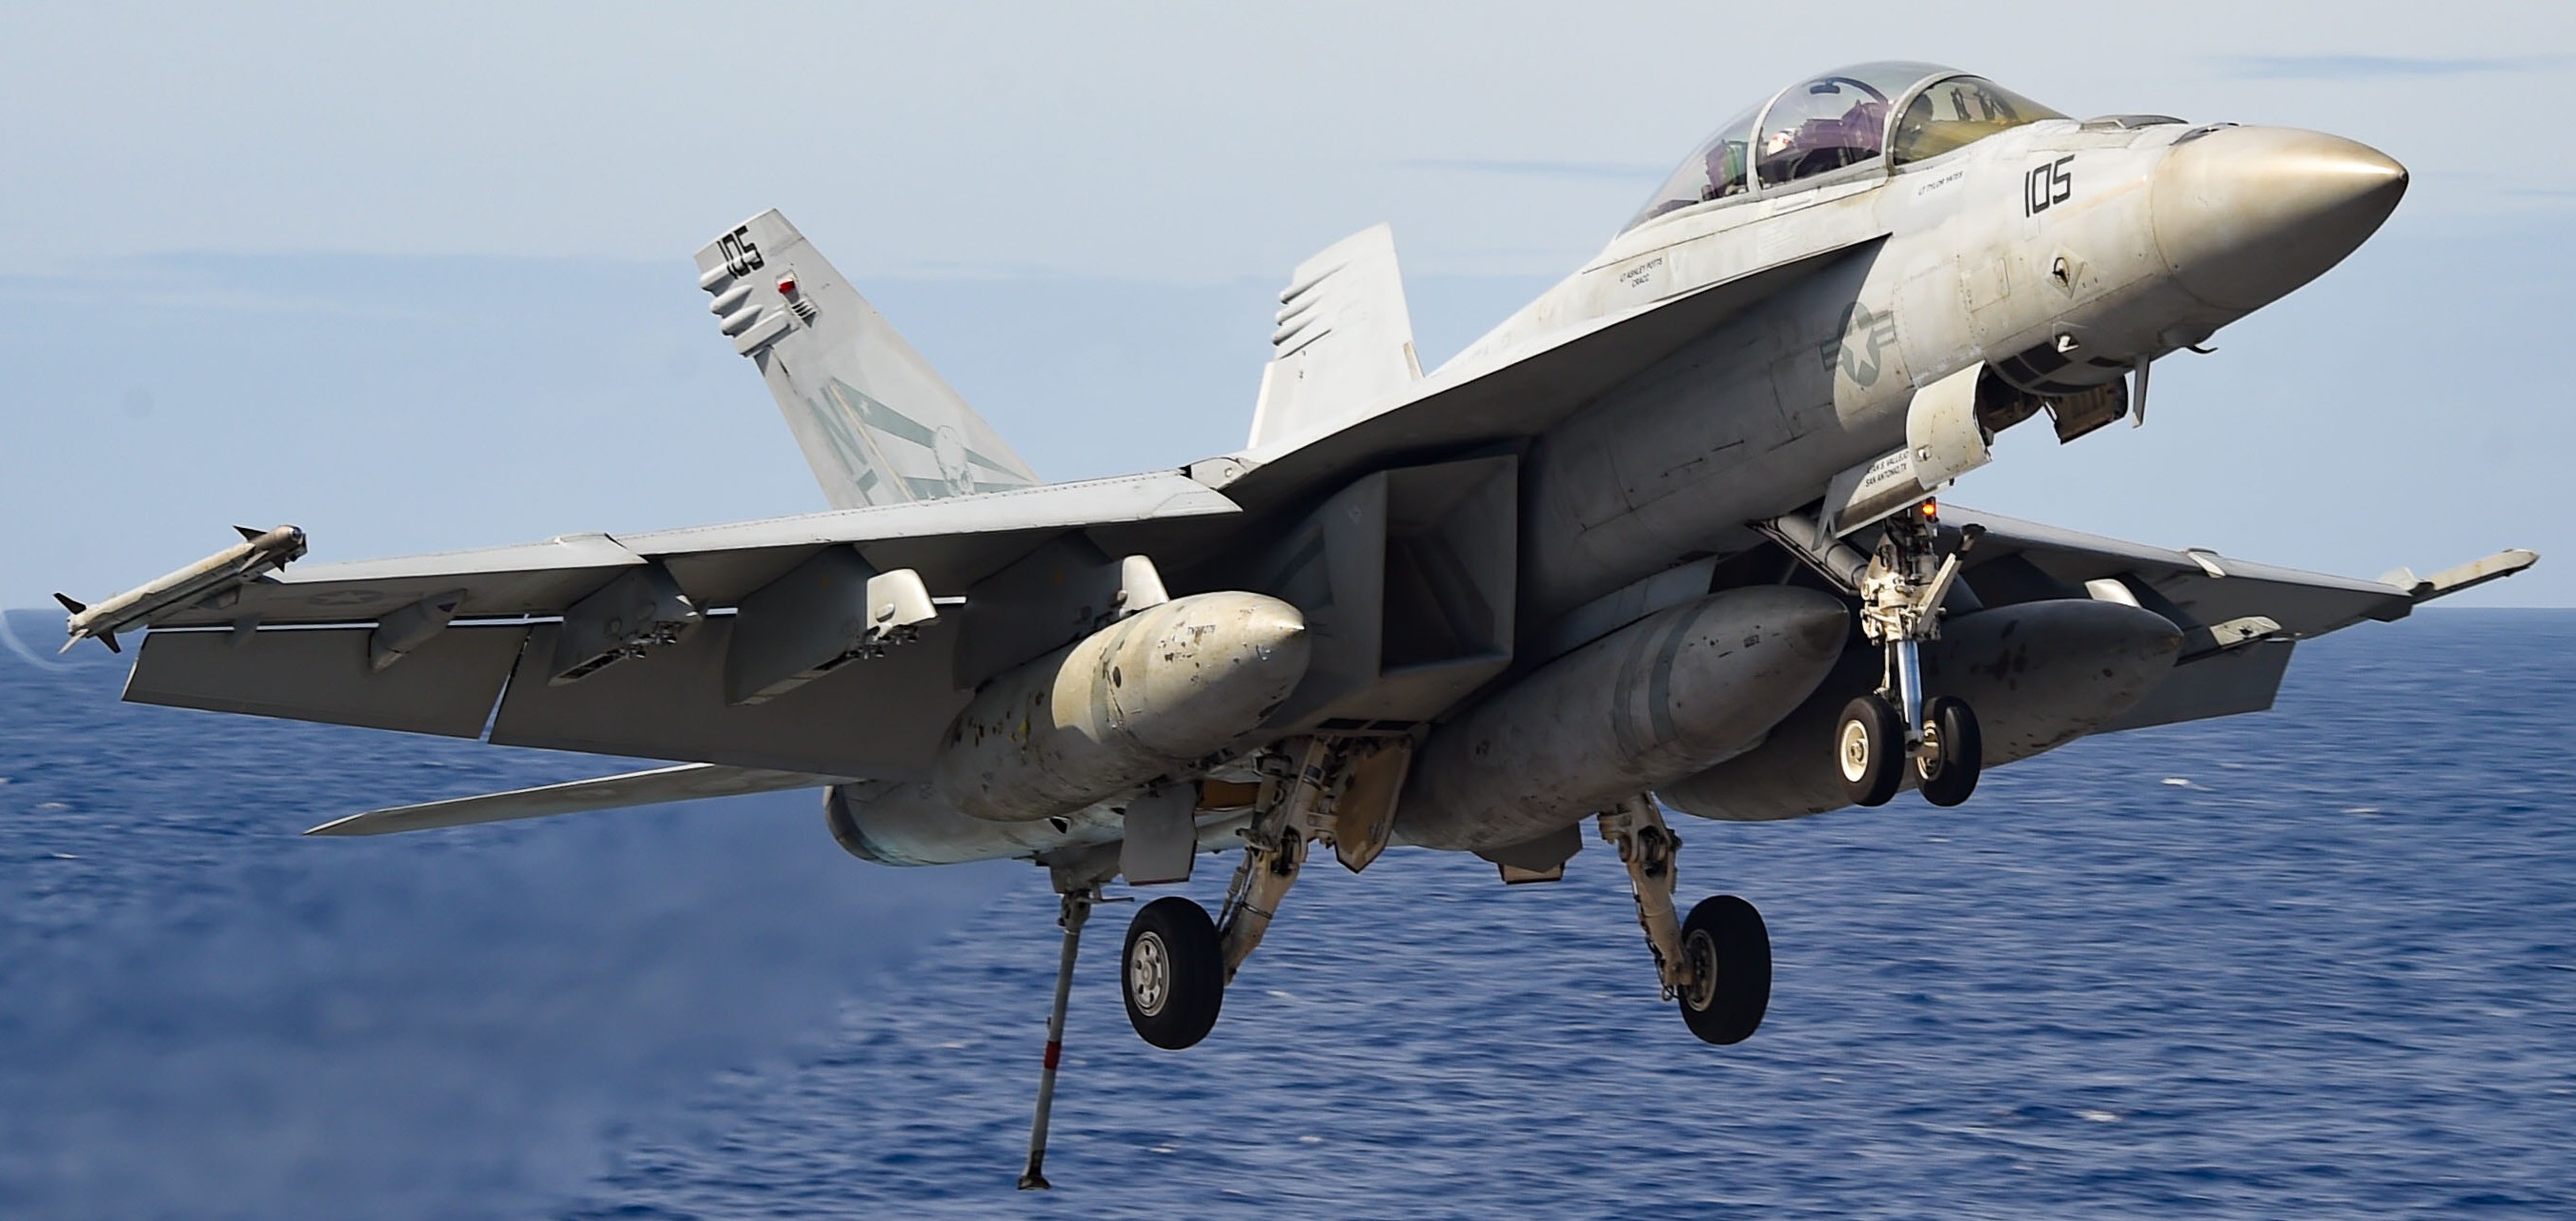 vfa-2 bounty hunters strike fighter squadron us navy f/a-18f super hornet carrier air wing cvw-2 uss carl vinson cvn-70 100